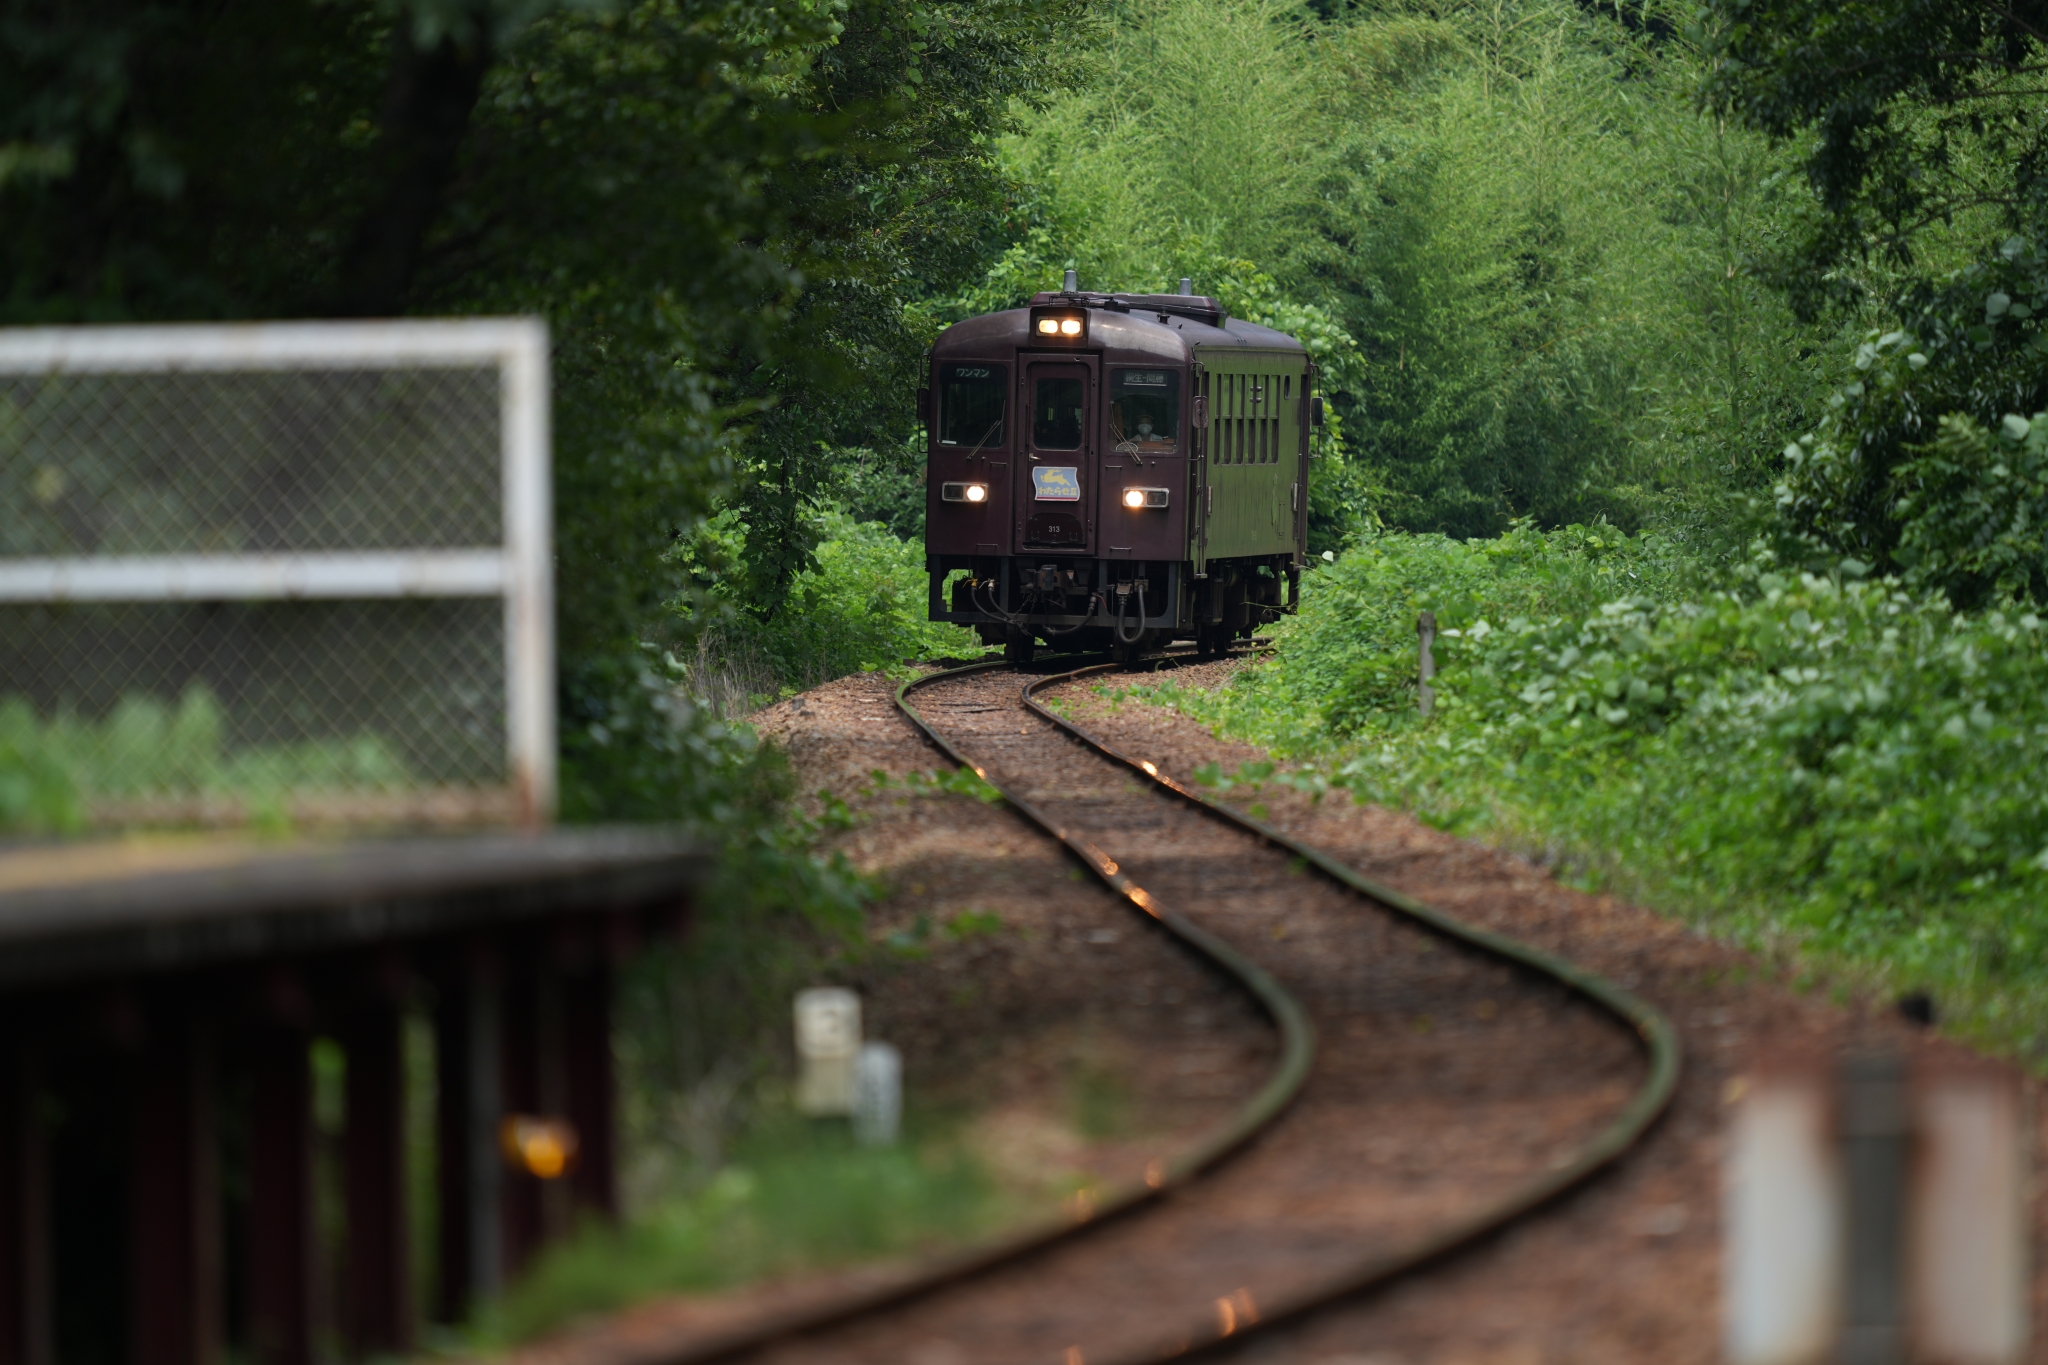 A single carriage train on a single track railway through a forest